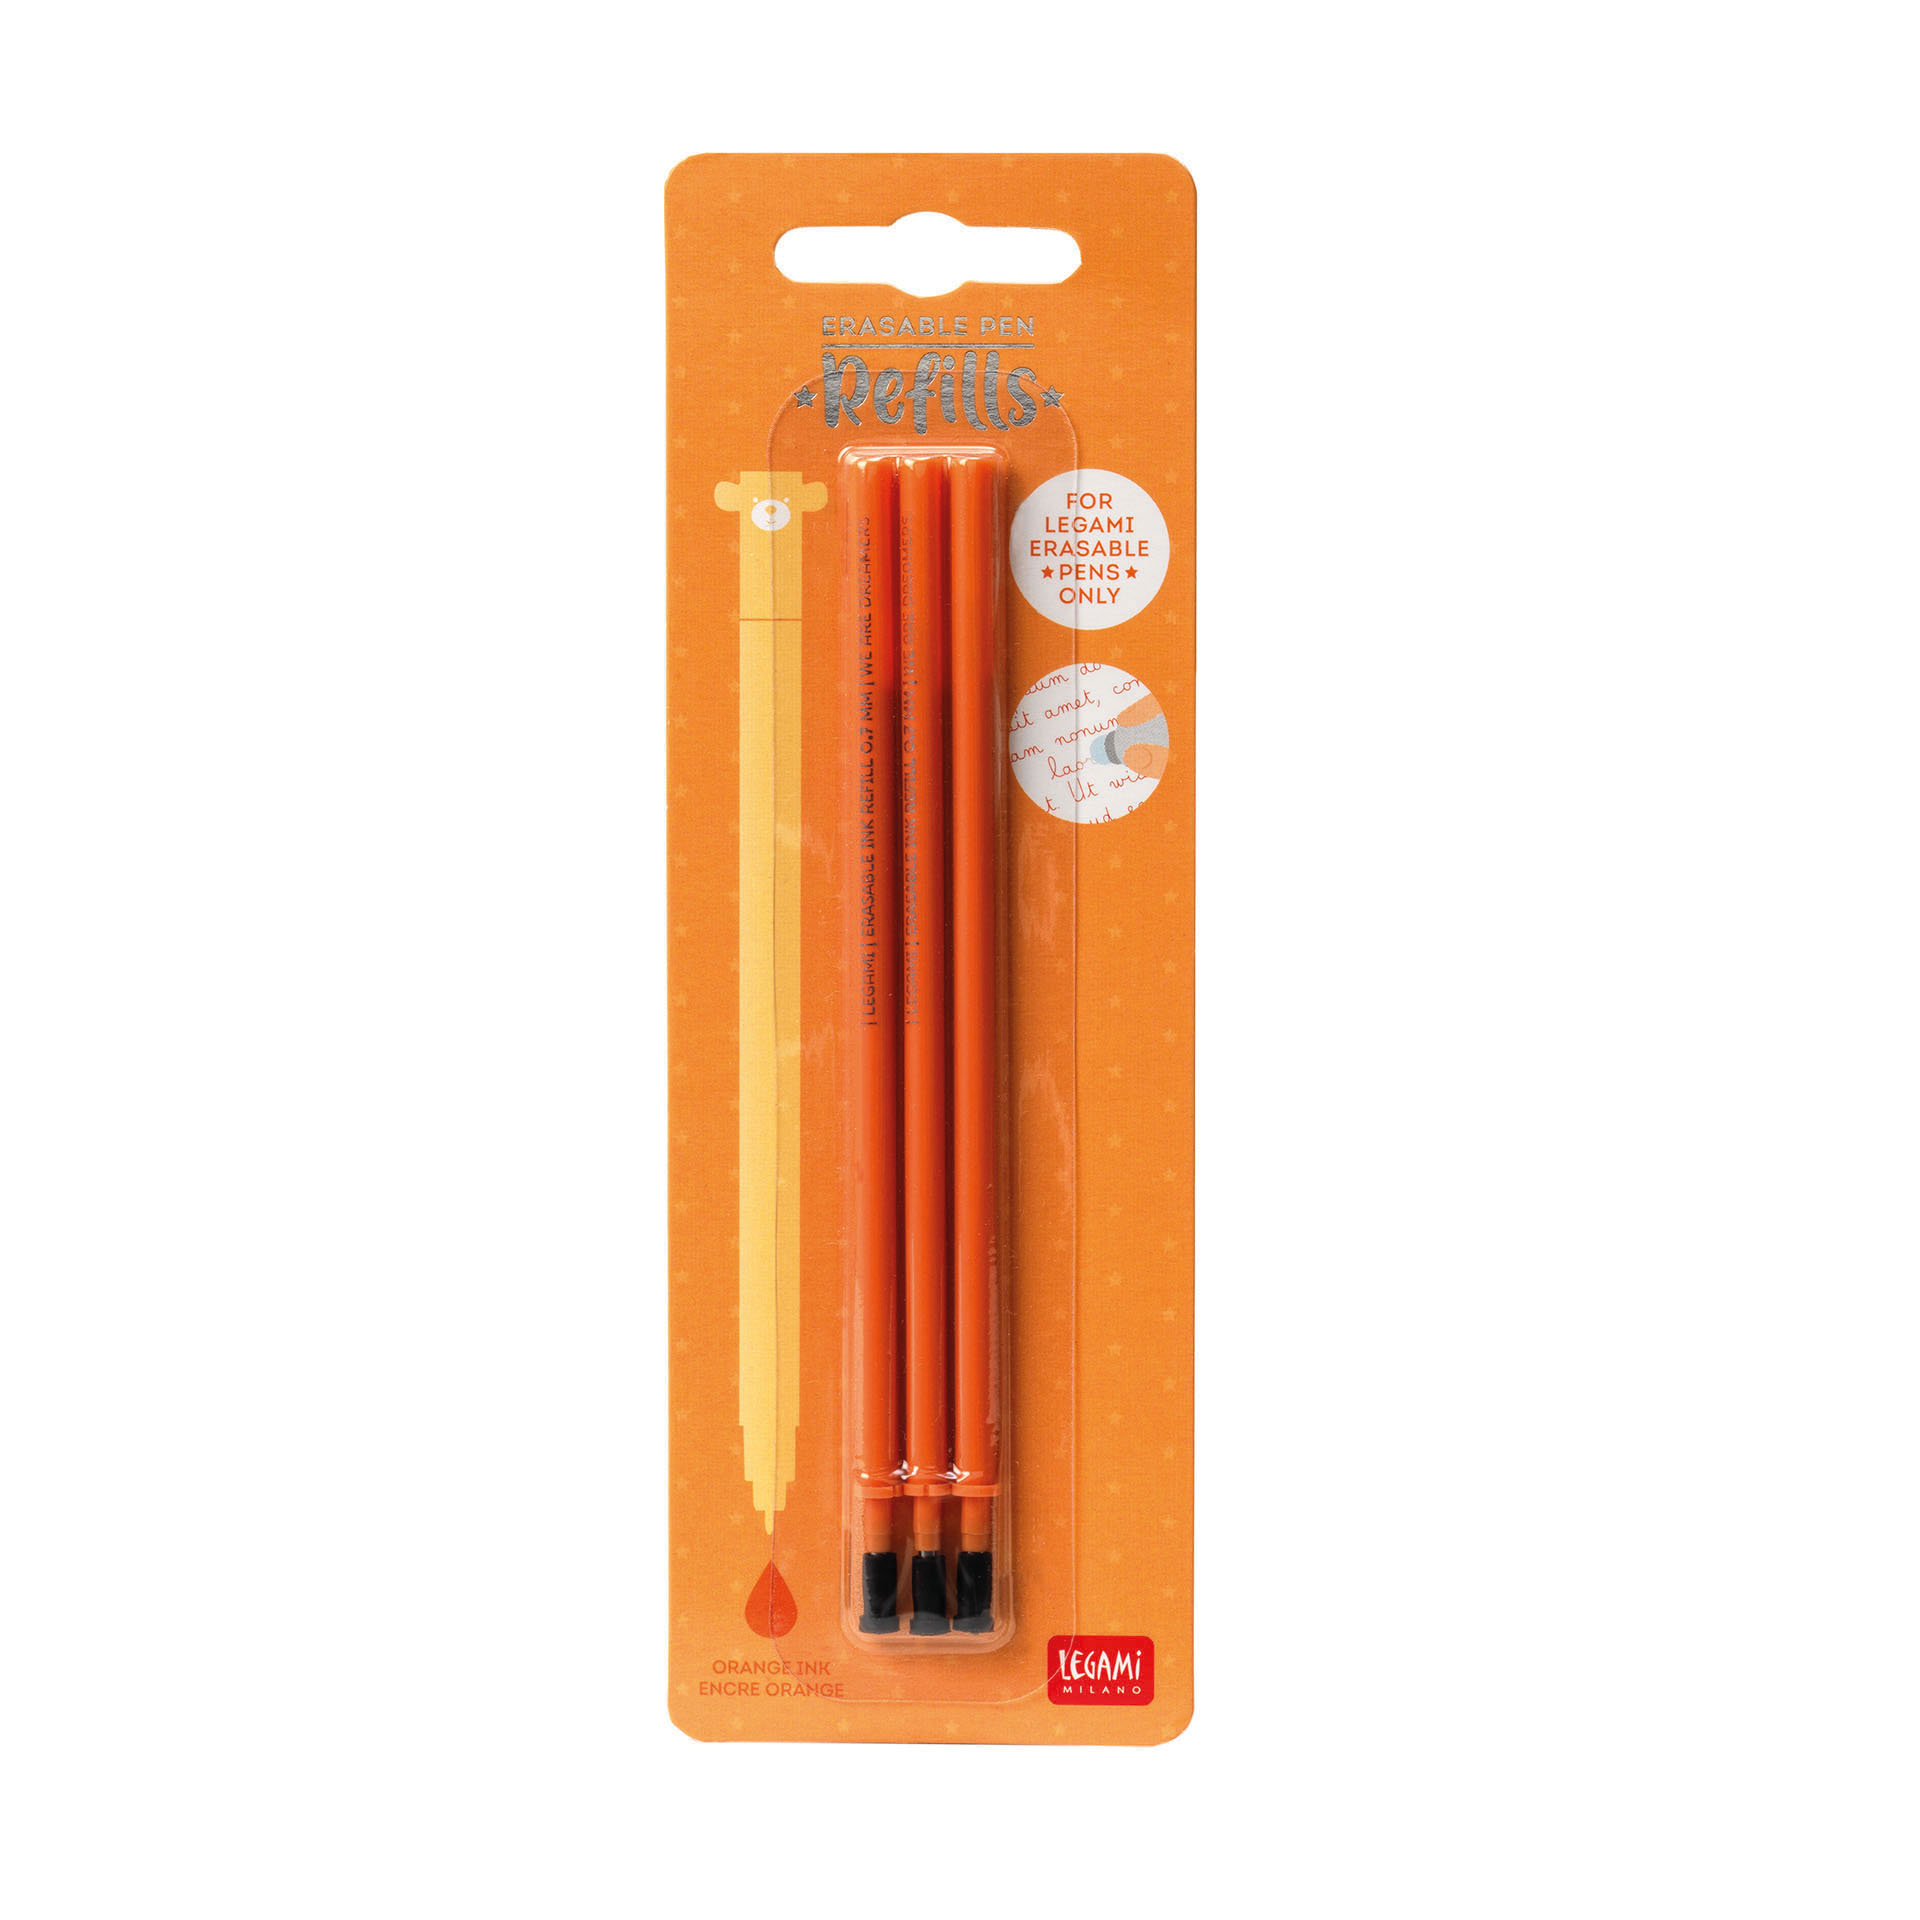 Refills for erasable pen orange